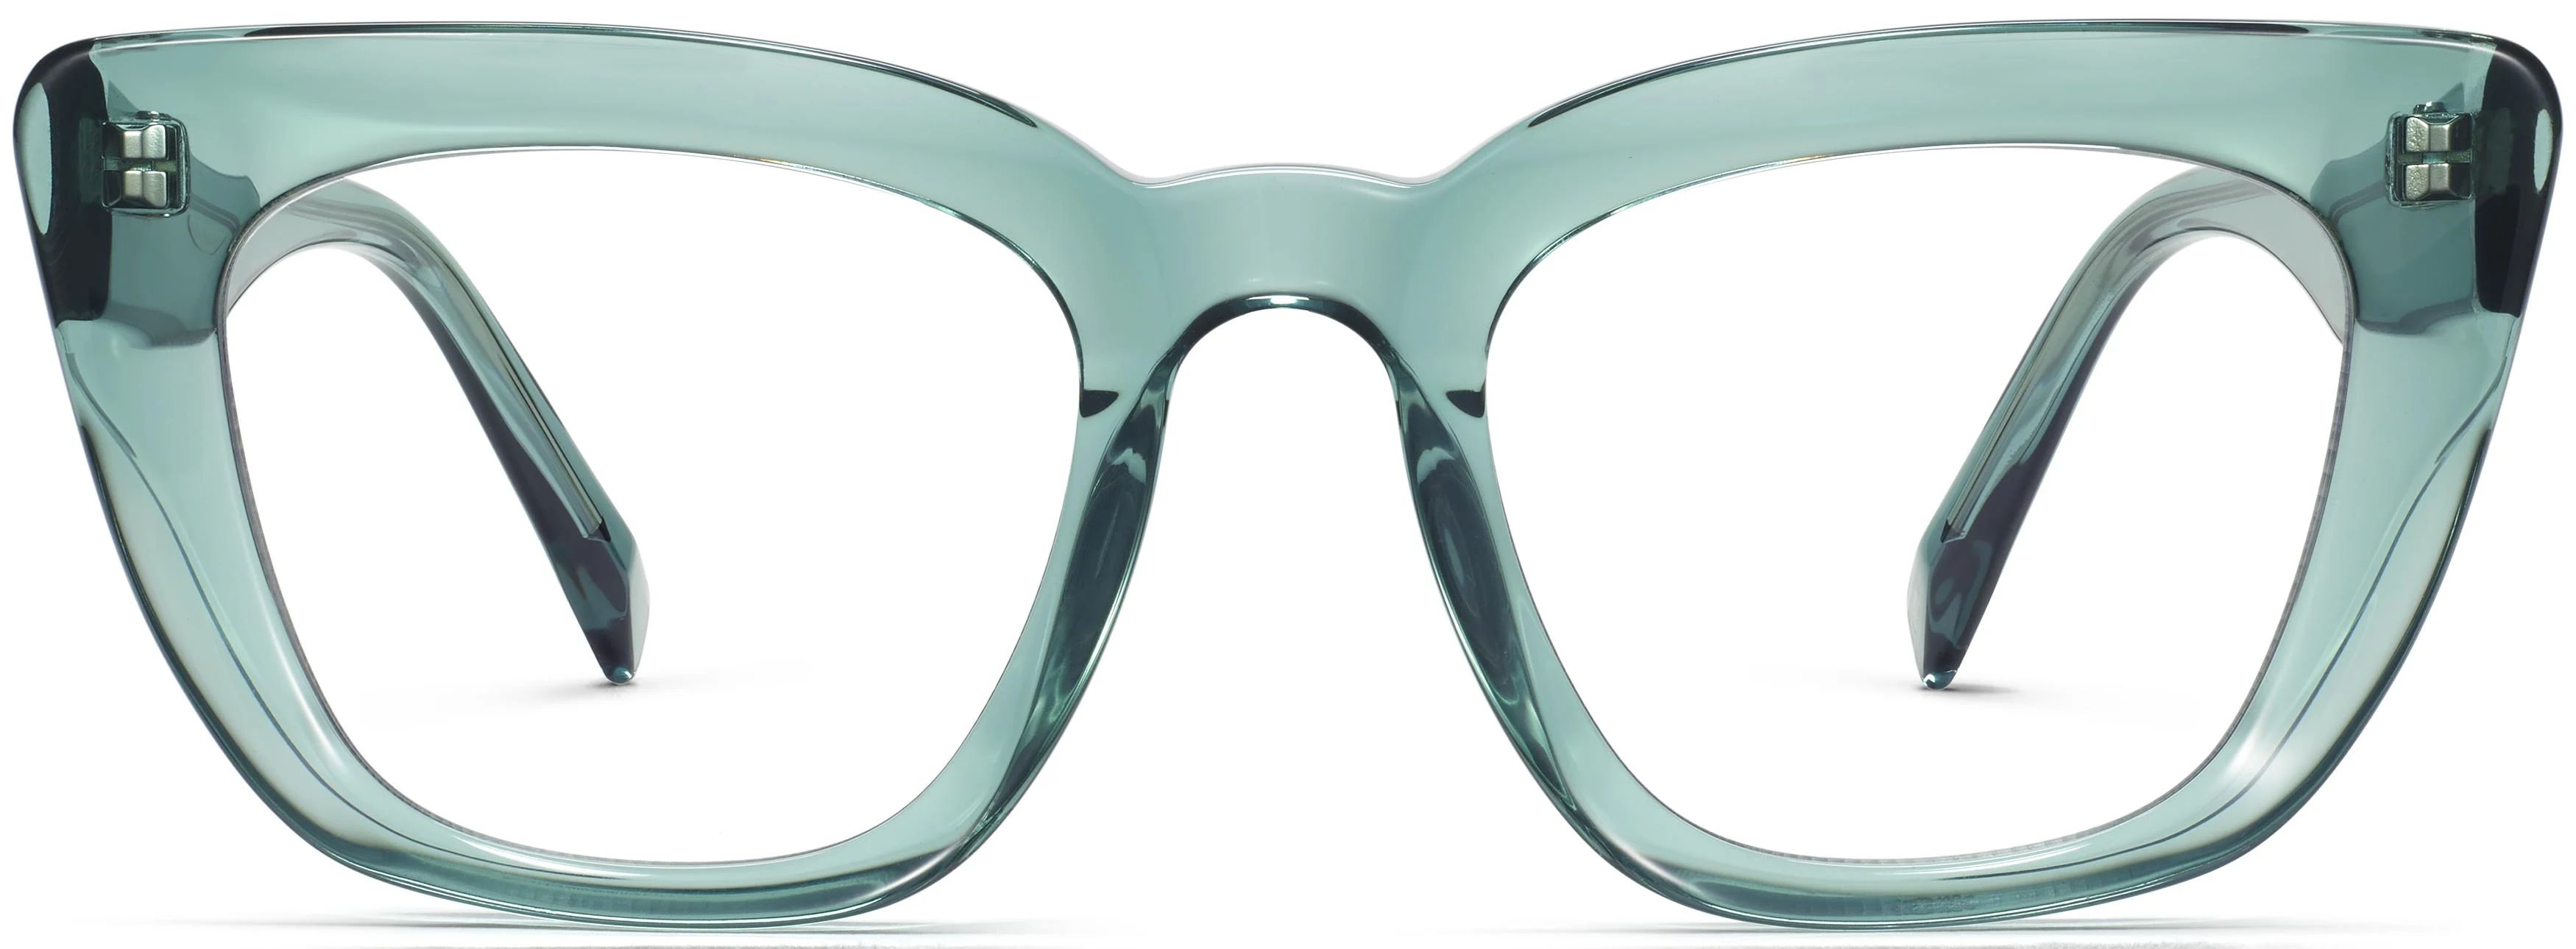 Lorena Eyeglasses in Viridian | Warby Parker | Warby Parker (US)